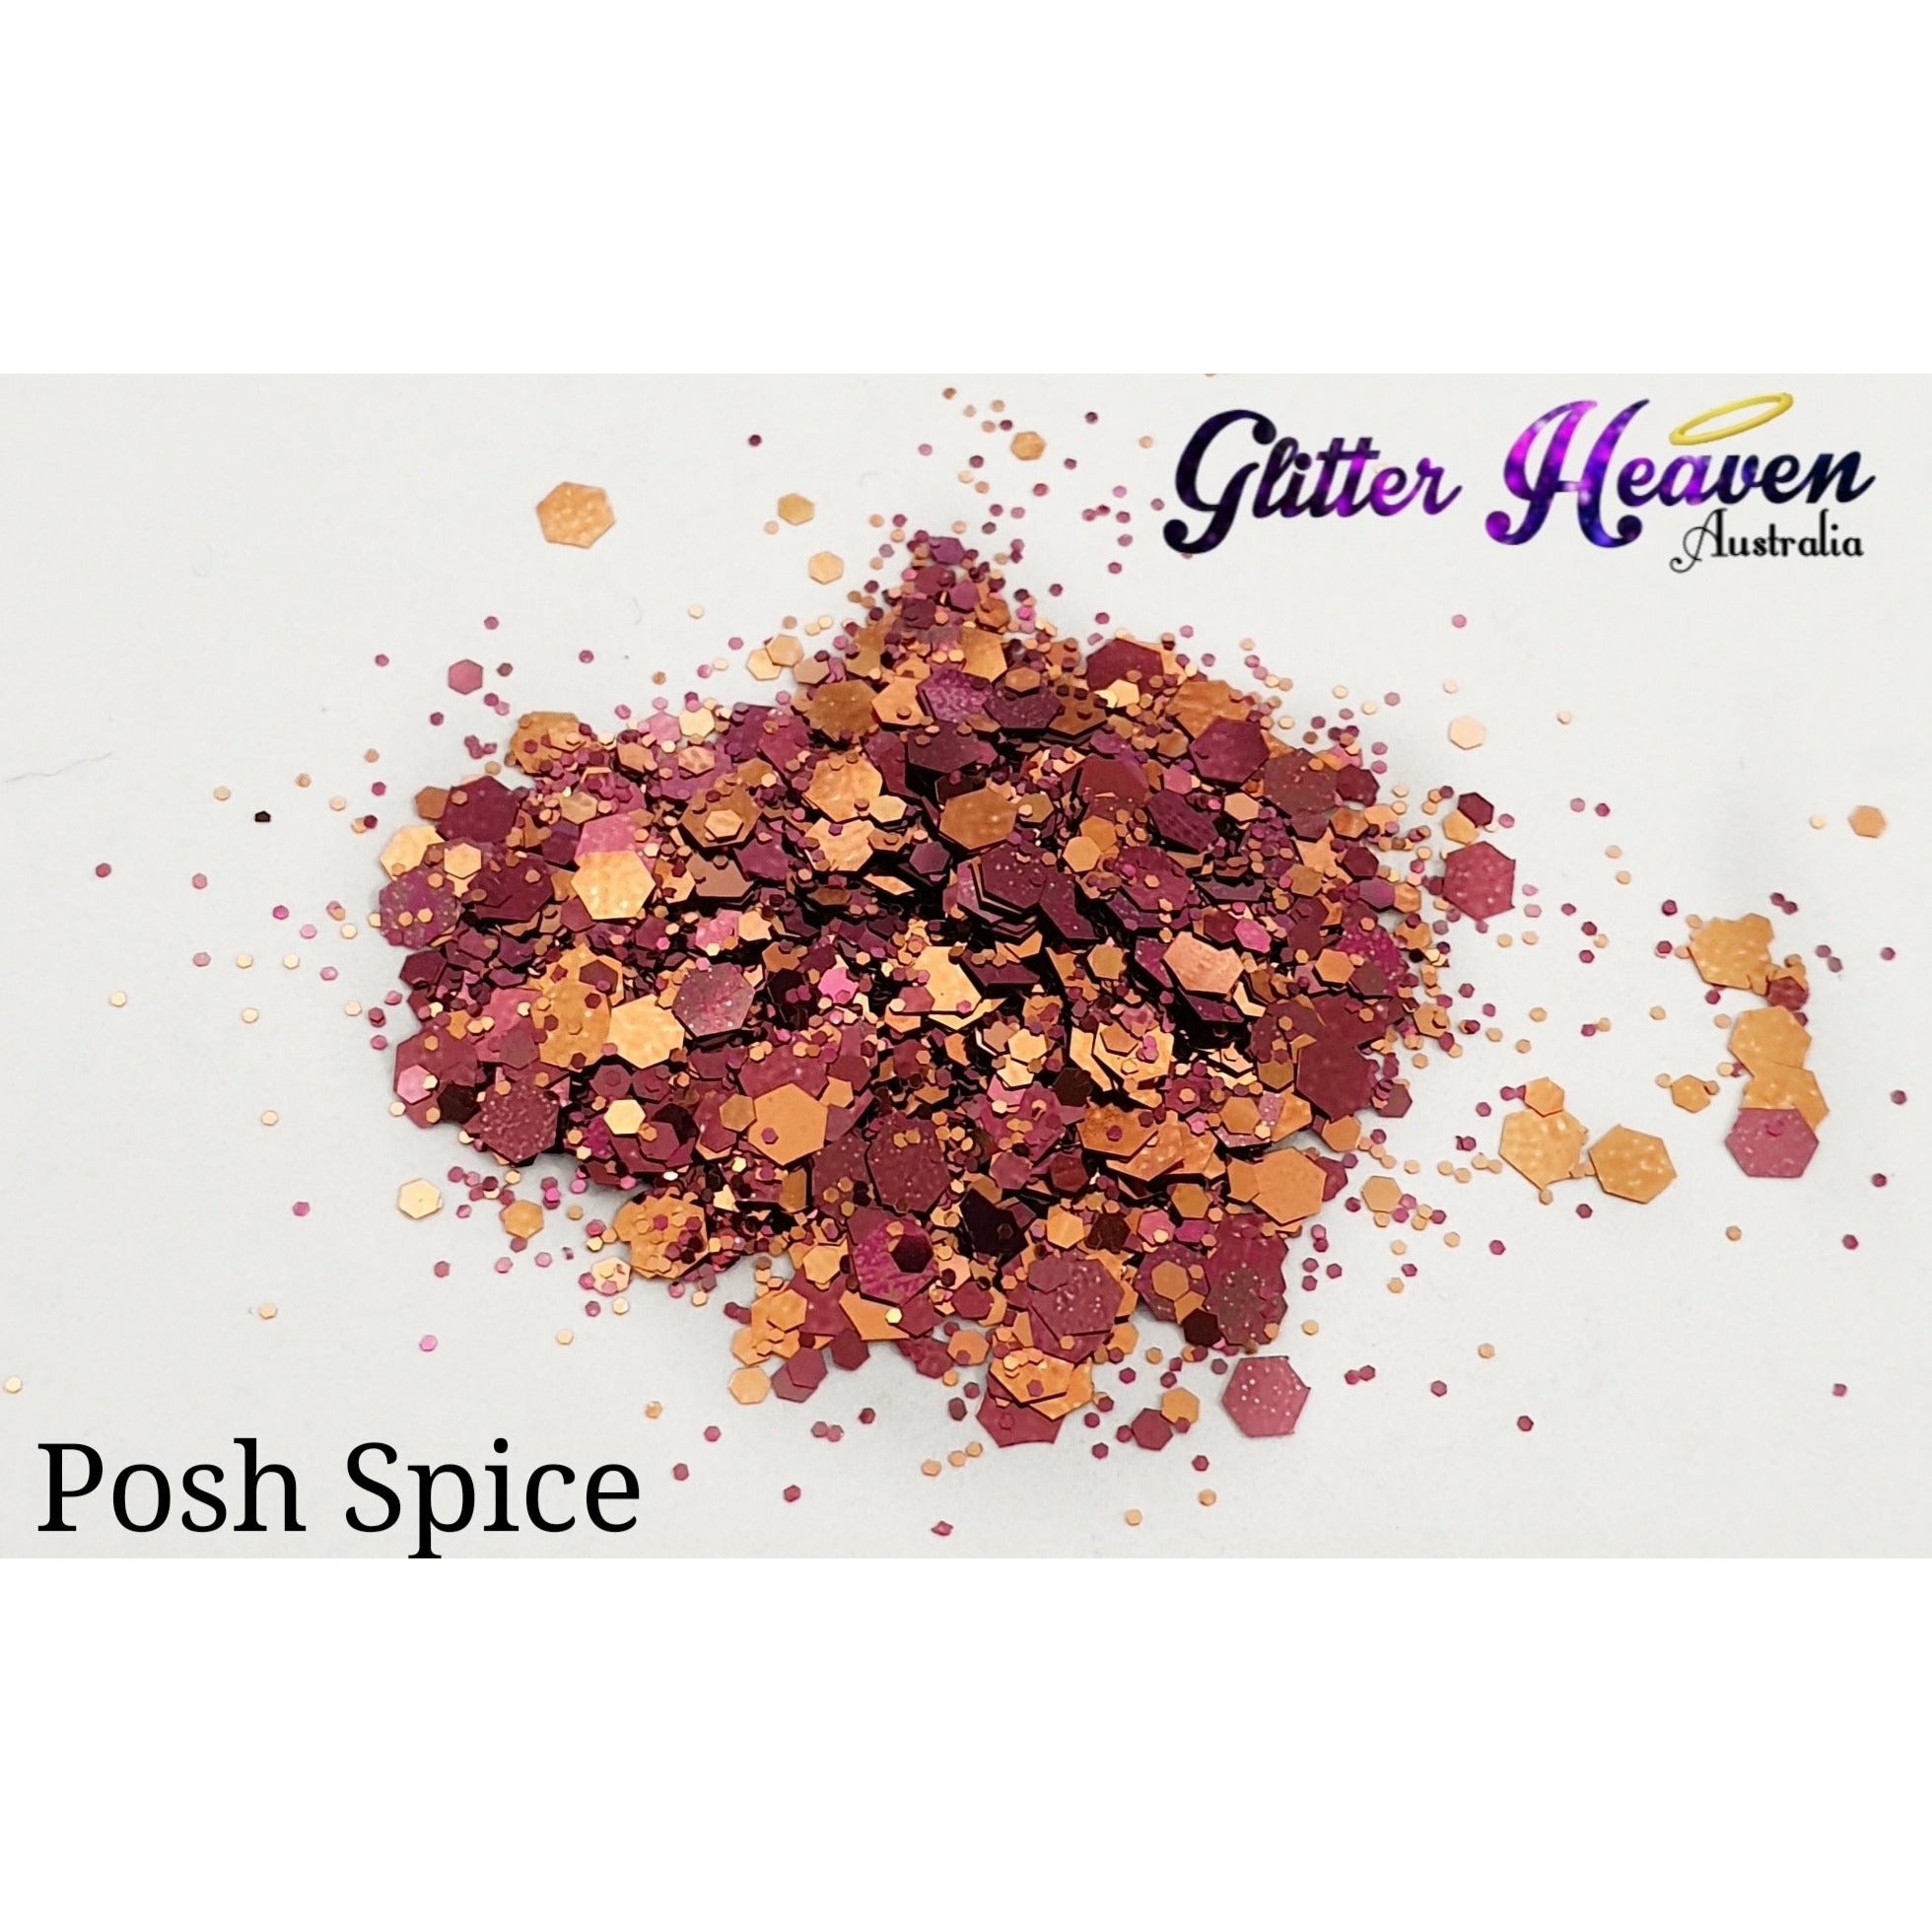 Posh Spice